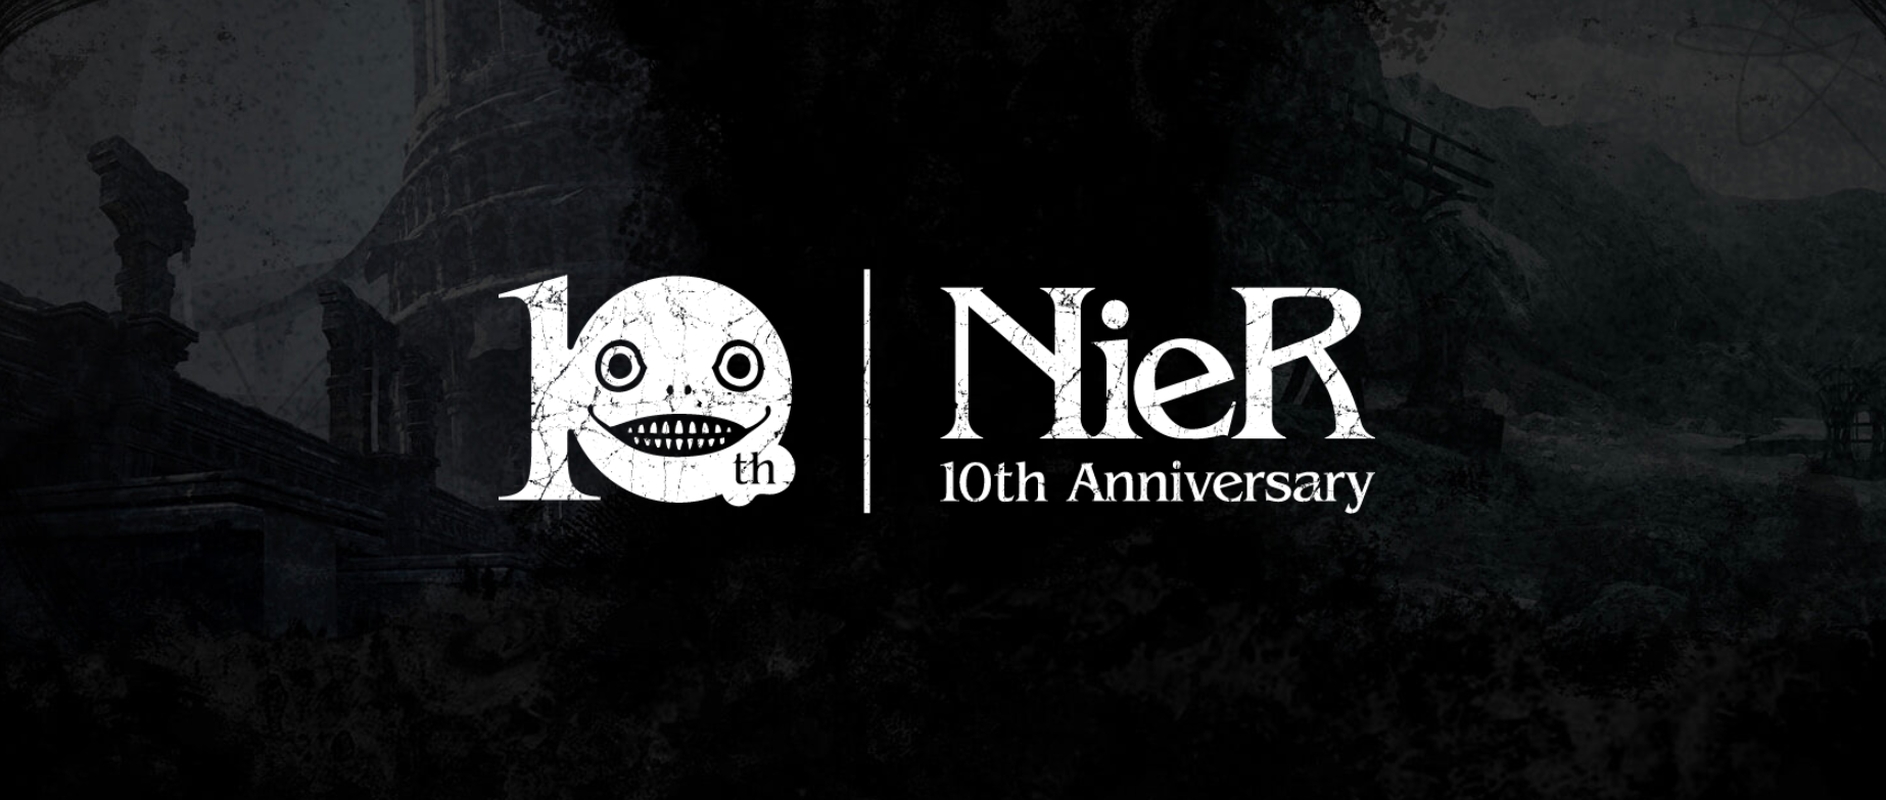 Square Enix Unveils Website Celebrating Ten Years Of The NieR Series